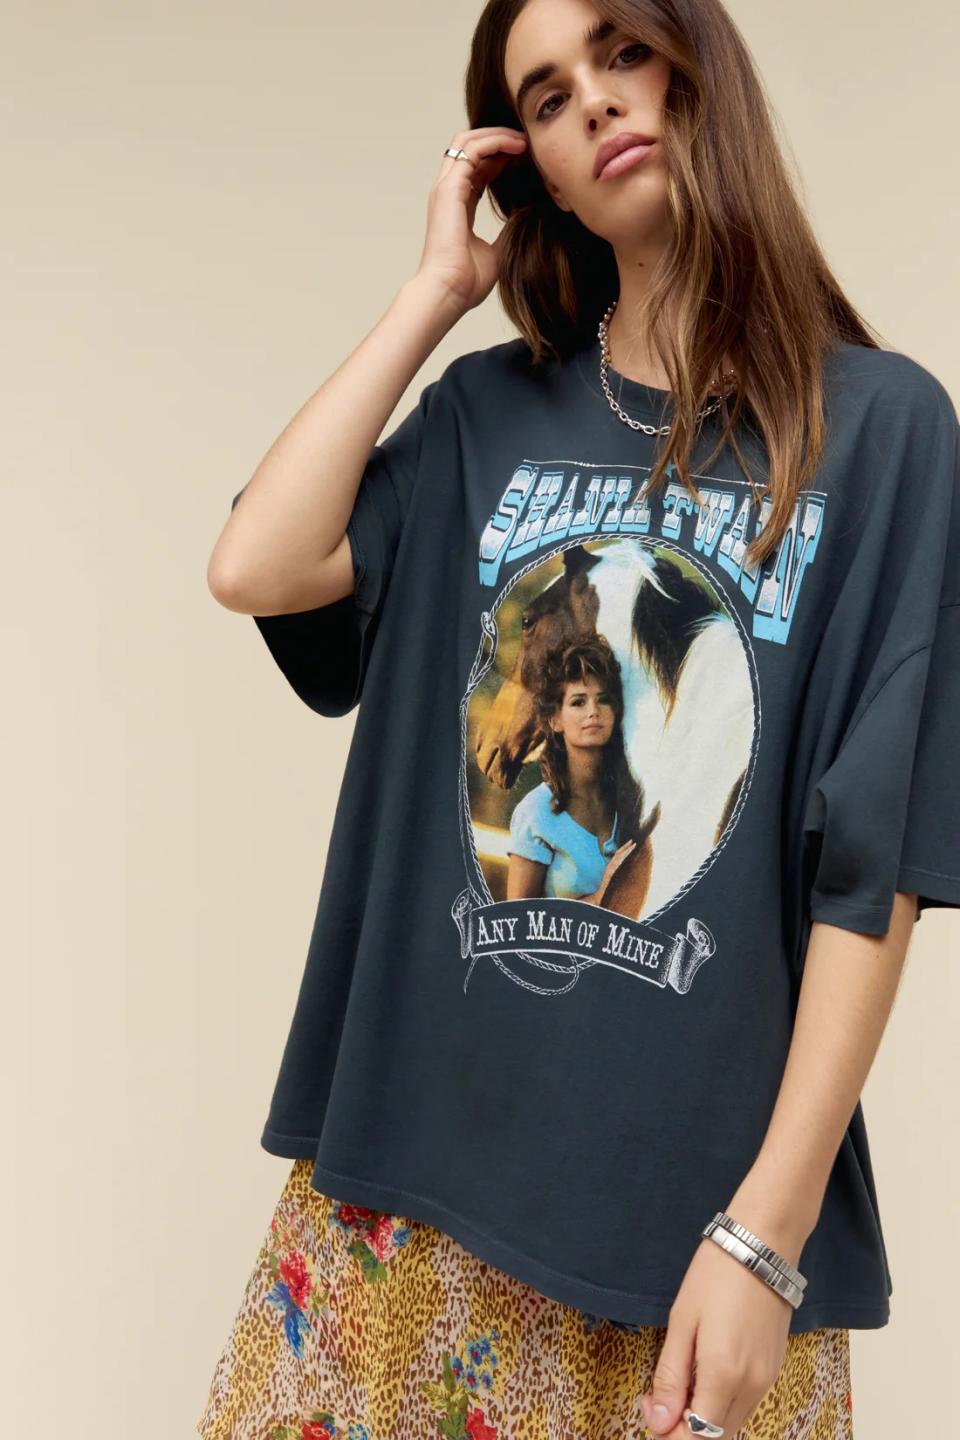 model wearing oversized Shania Twain graphic t-shirt